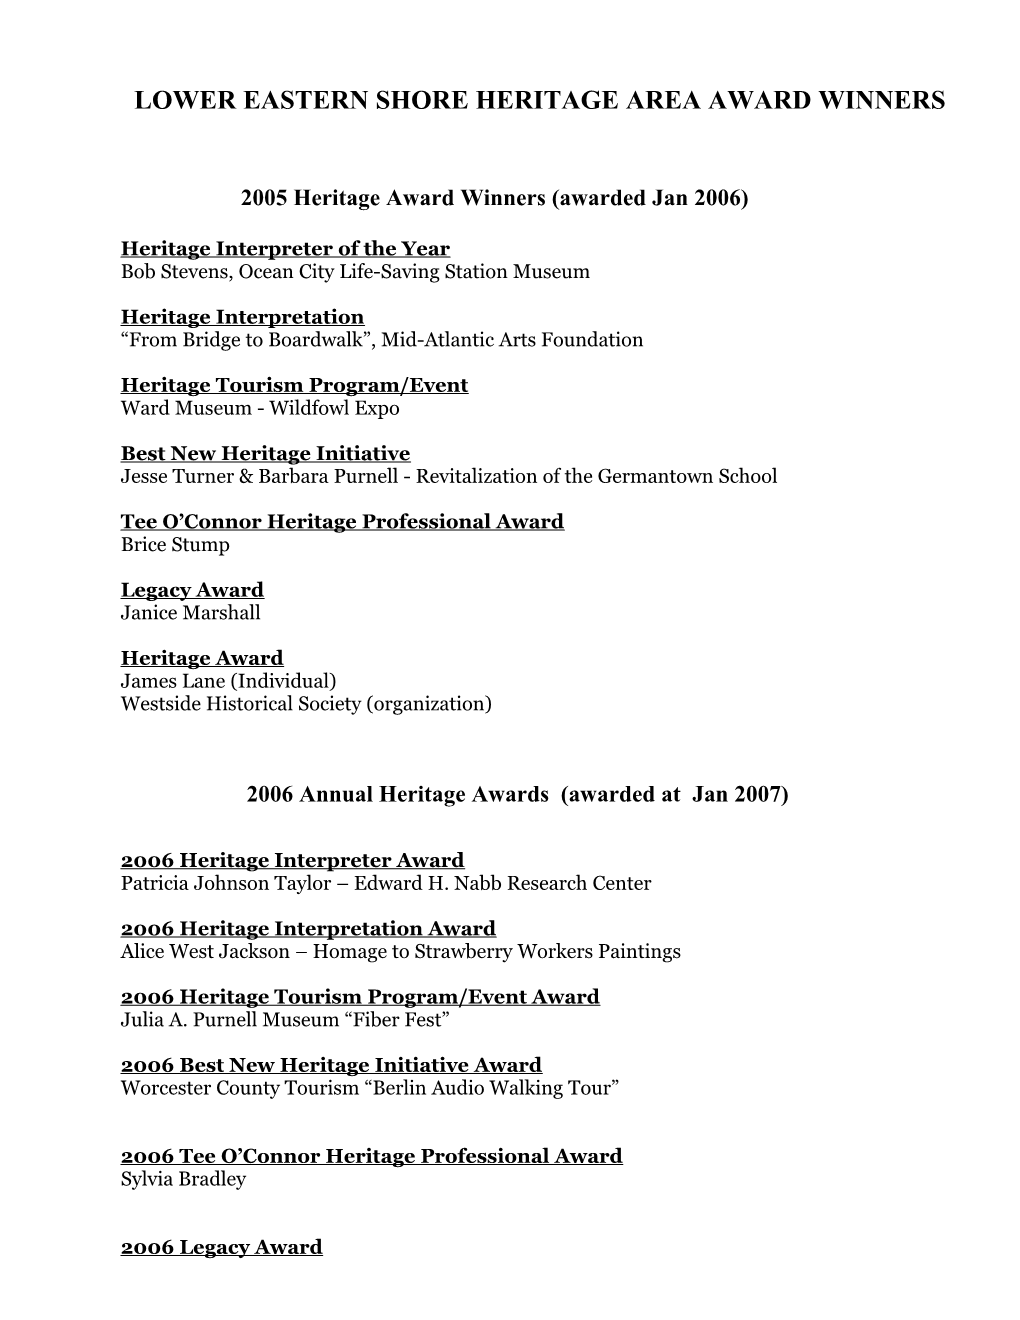 2005 Heritage Award Winners